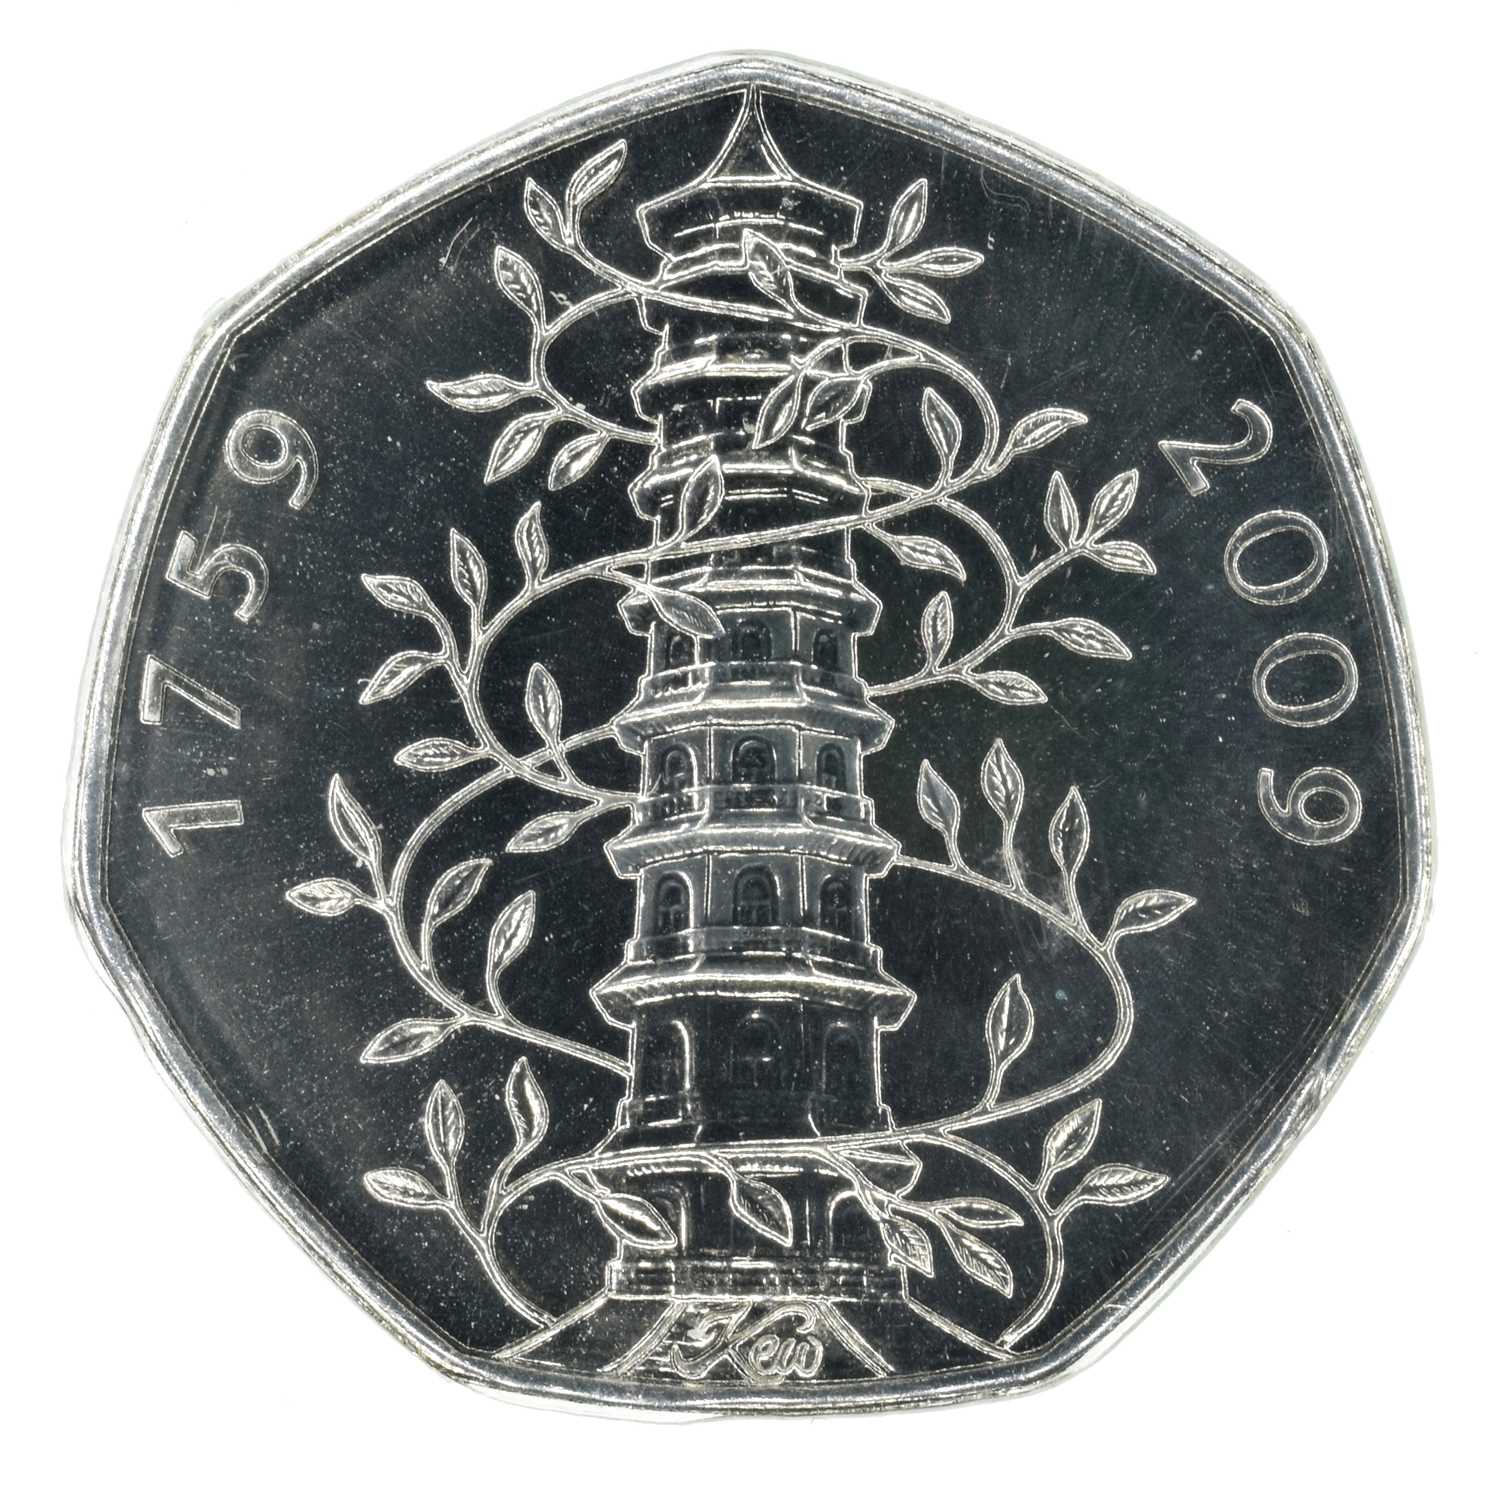 Lot 28 - 2009 Royal Mint, Fifty Pence, 250th Anniversary of the Royal Botanical Gardens, Kew.